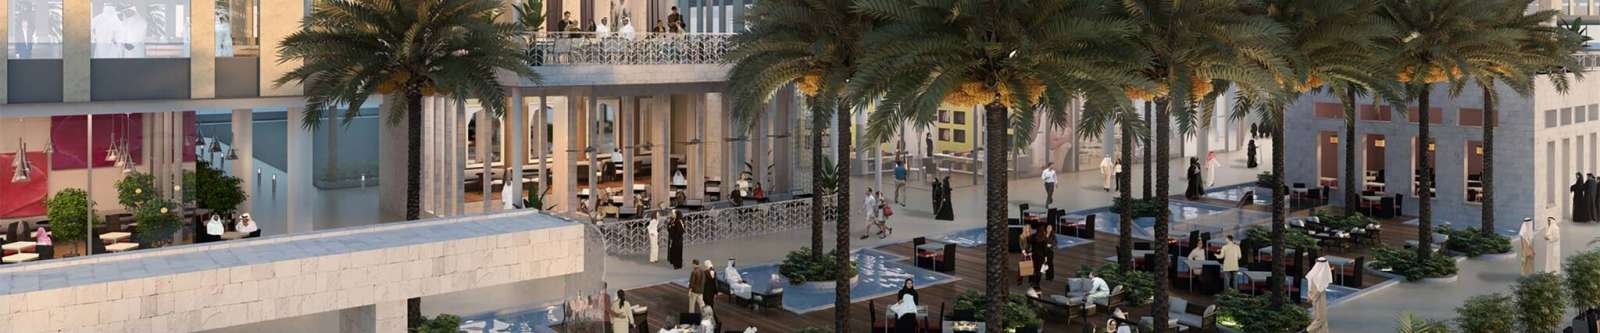 Northgate Mall, Doha